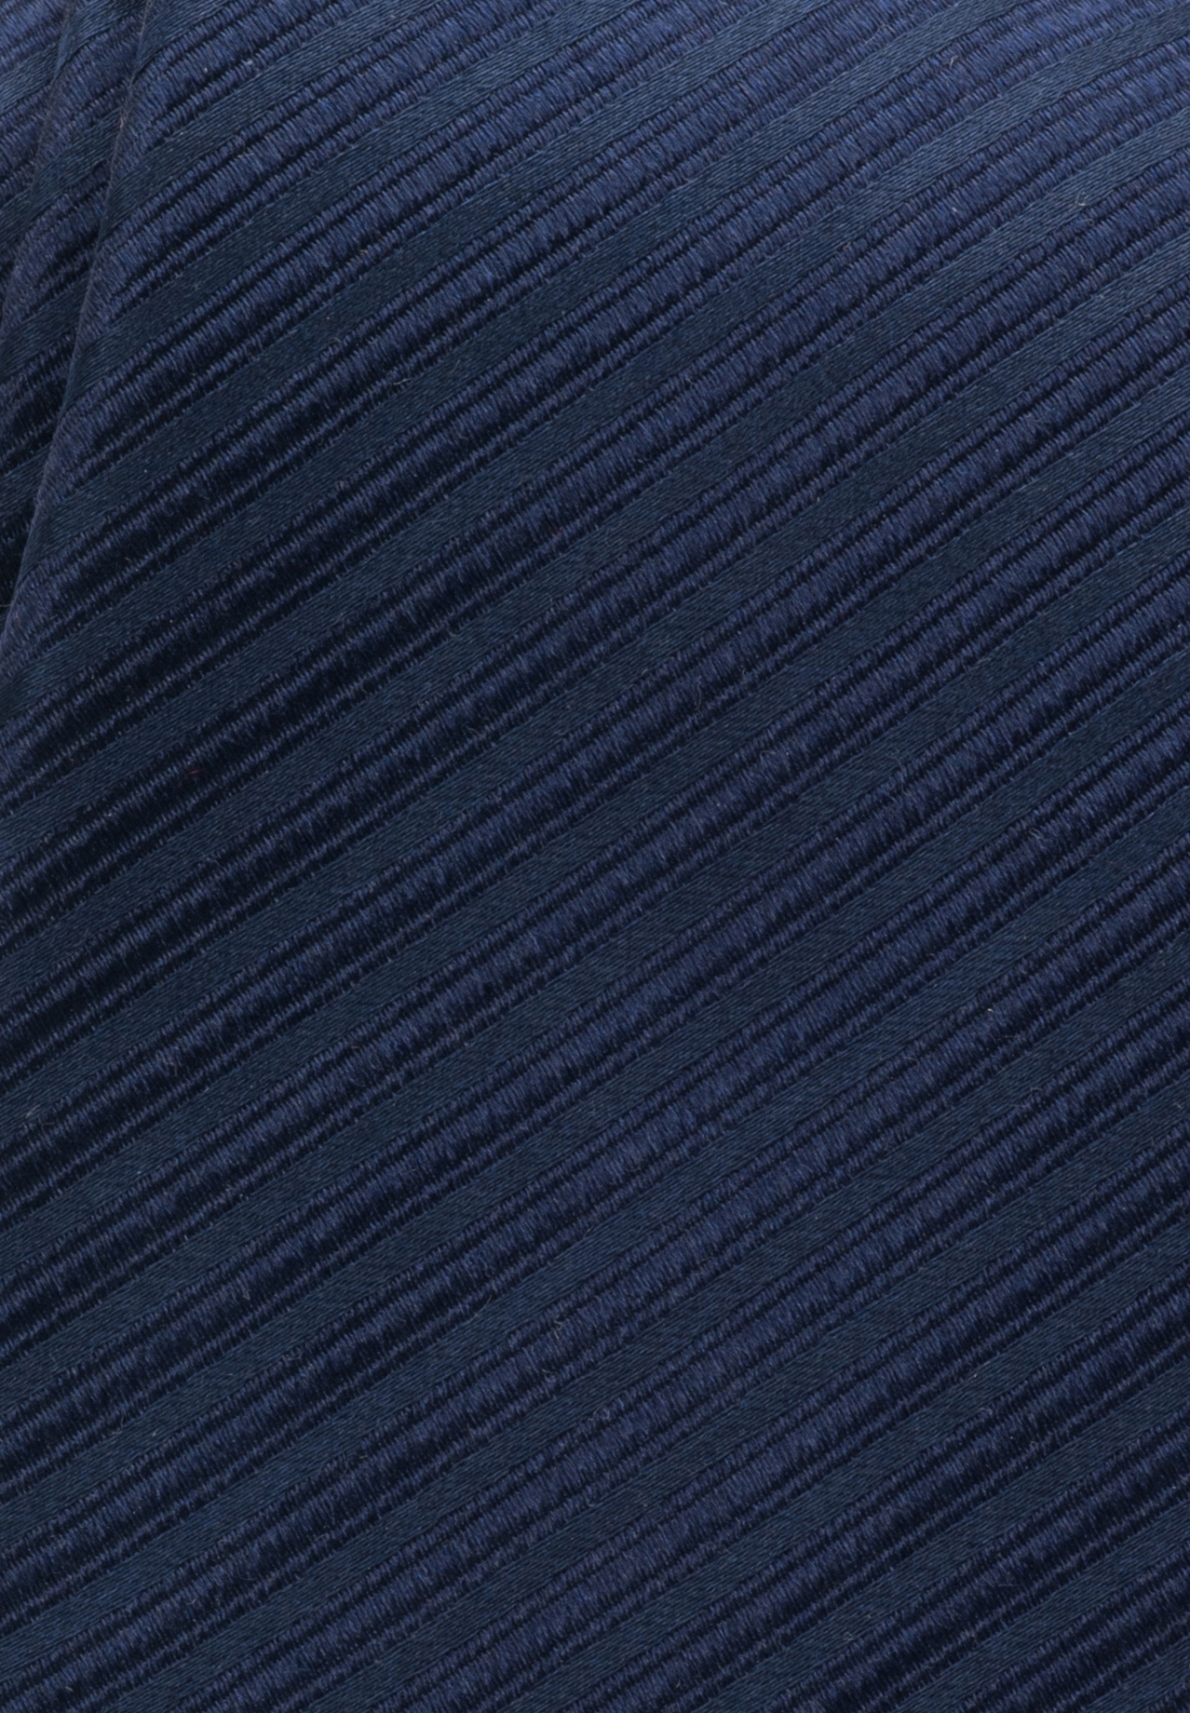 Eterna Krawatte dunkelblau gestreift 9716-19 SPEZIALIST MODE 